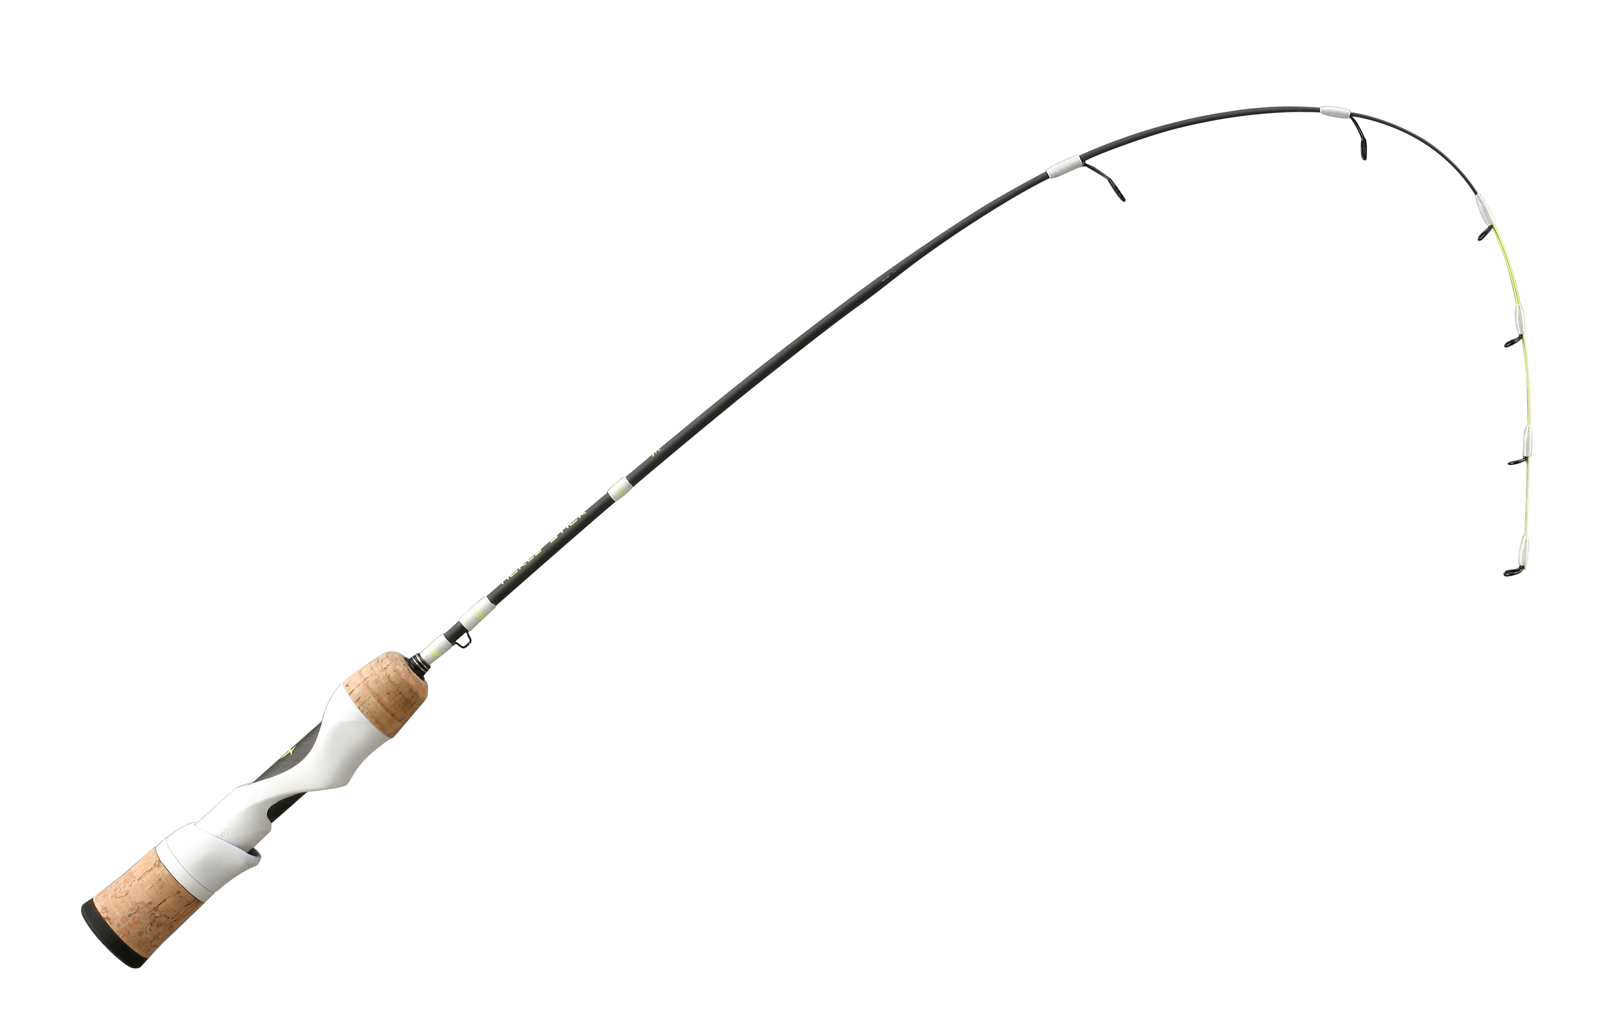 13 Fishing Tickle Stick (TS2) Ice Rod